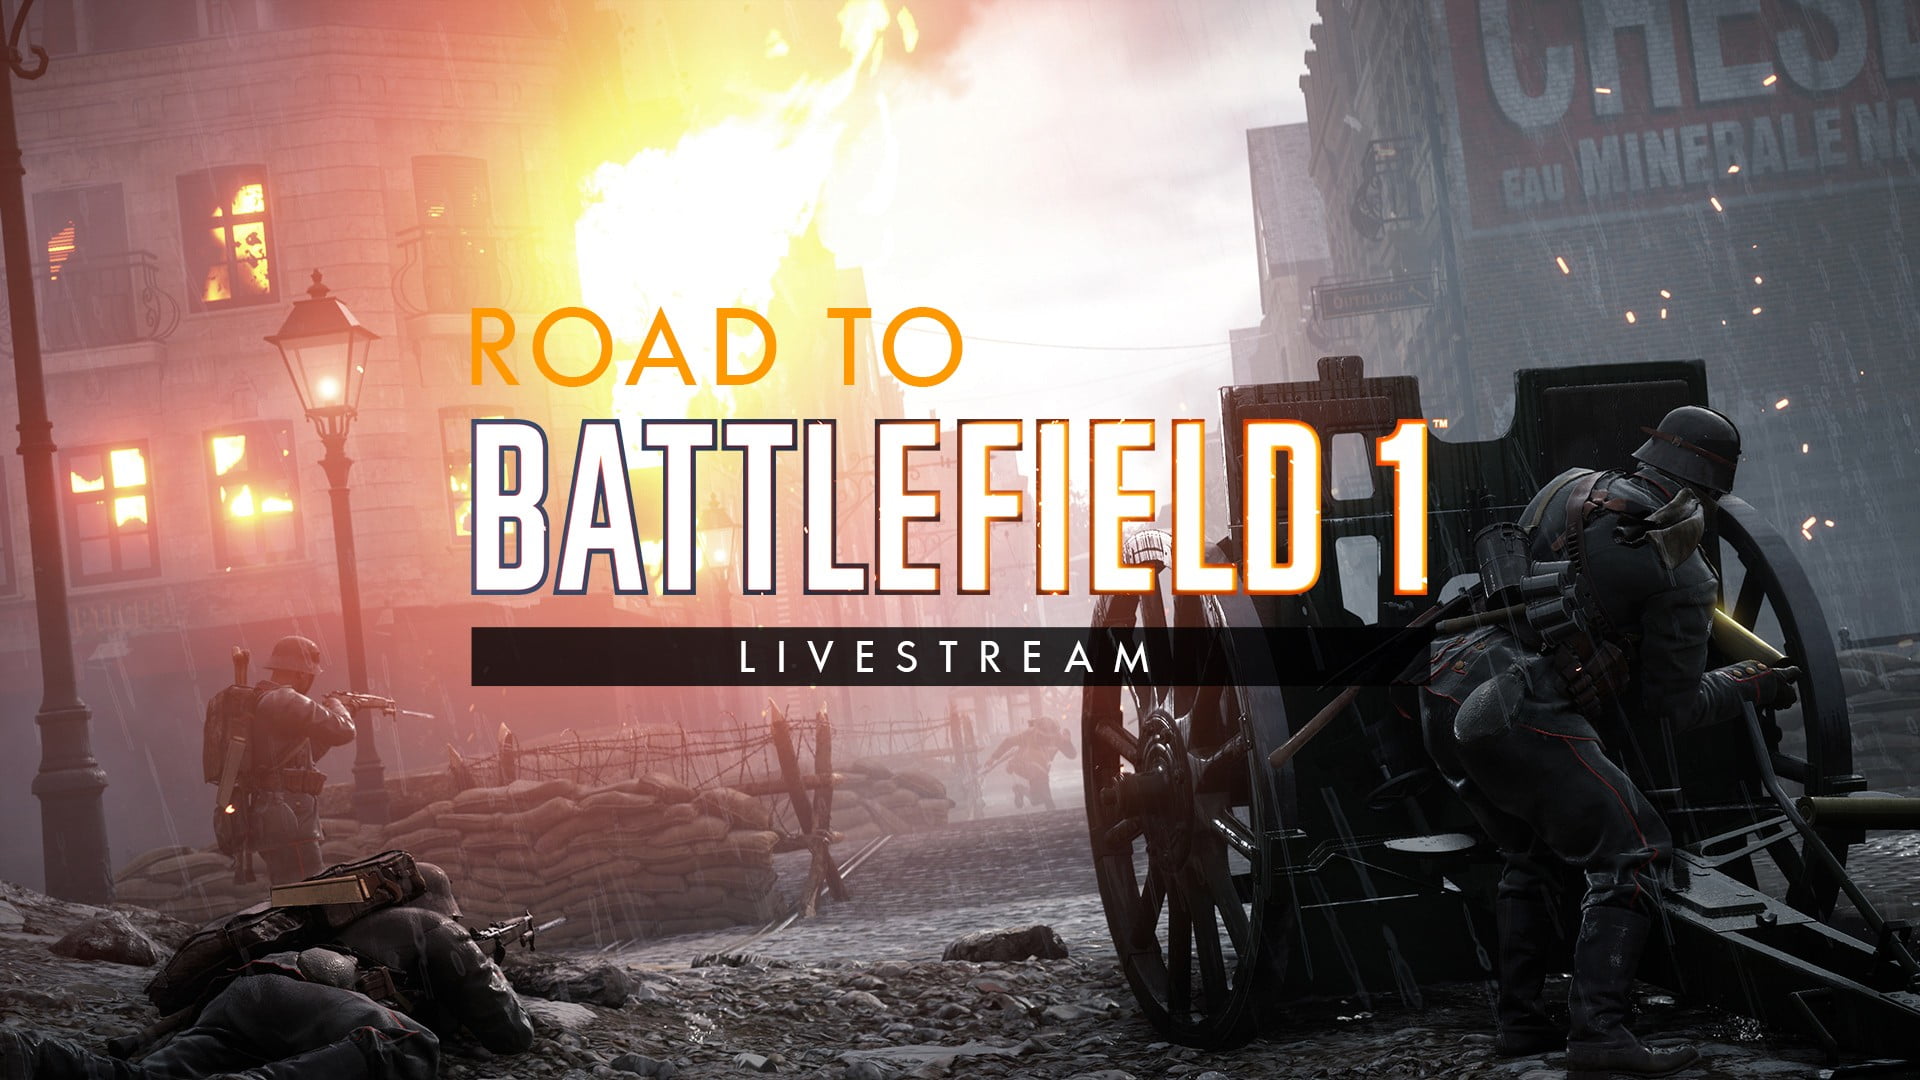 Road to Battlefield 1 Livestream illustration, communication